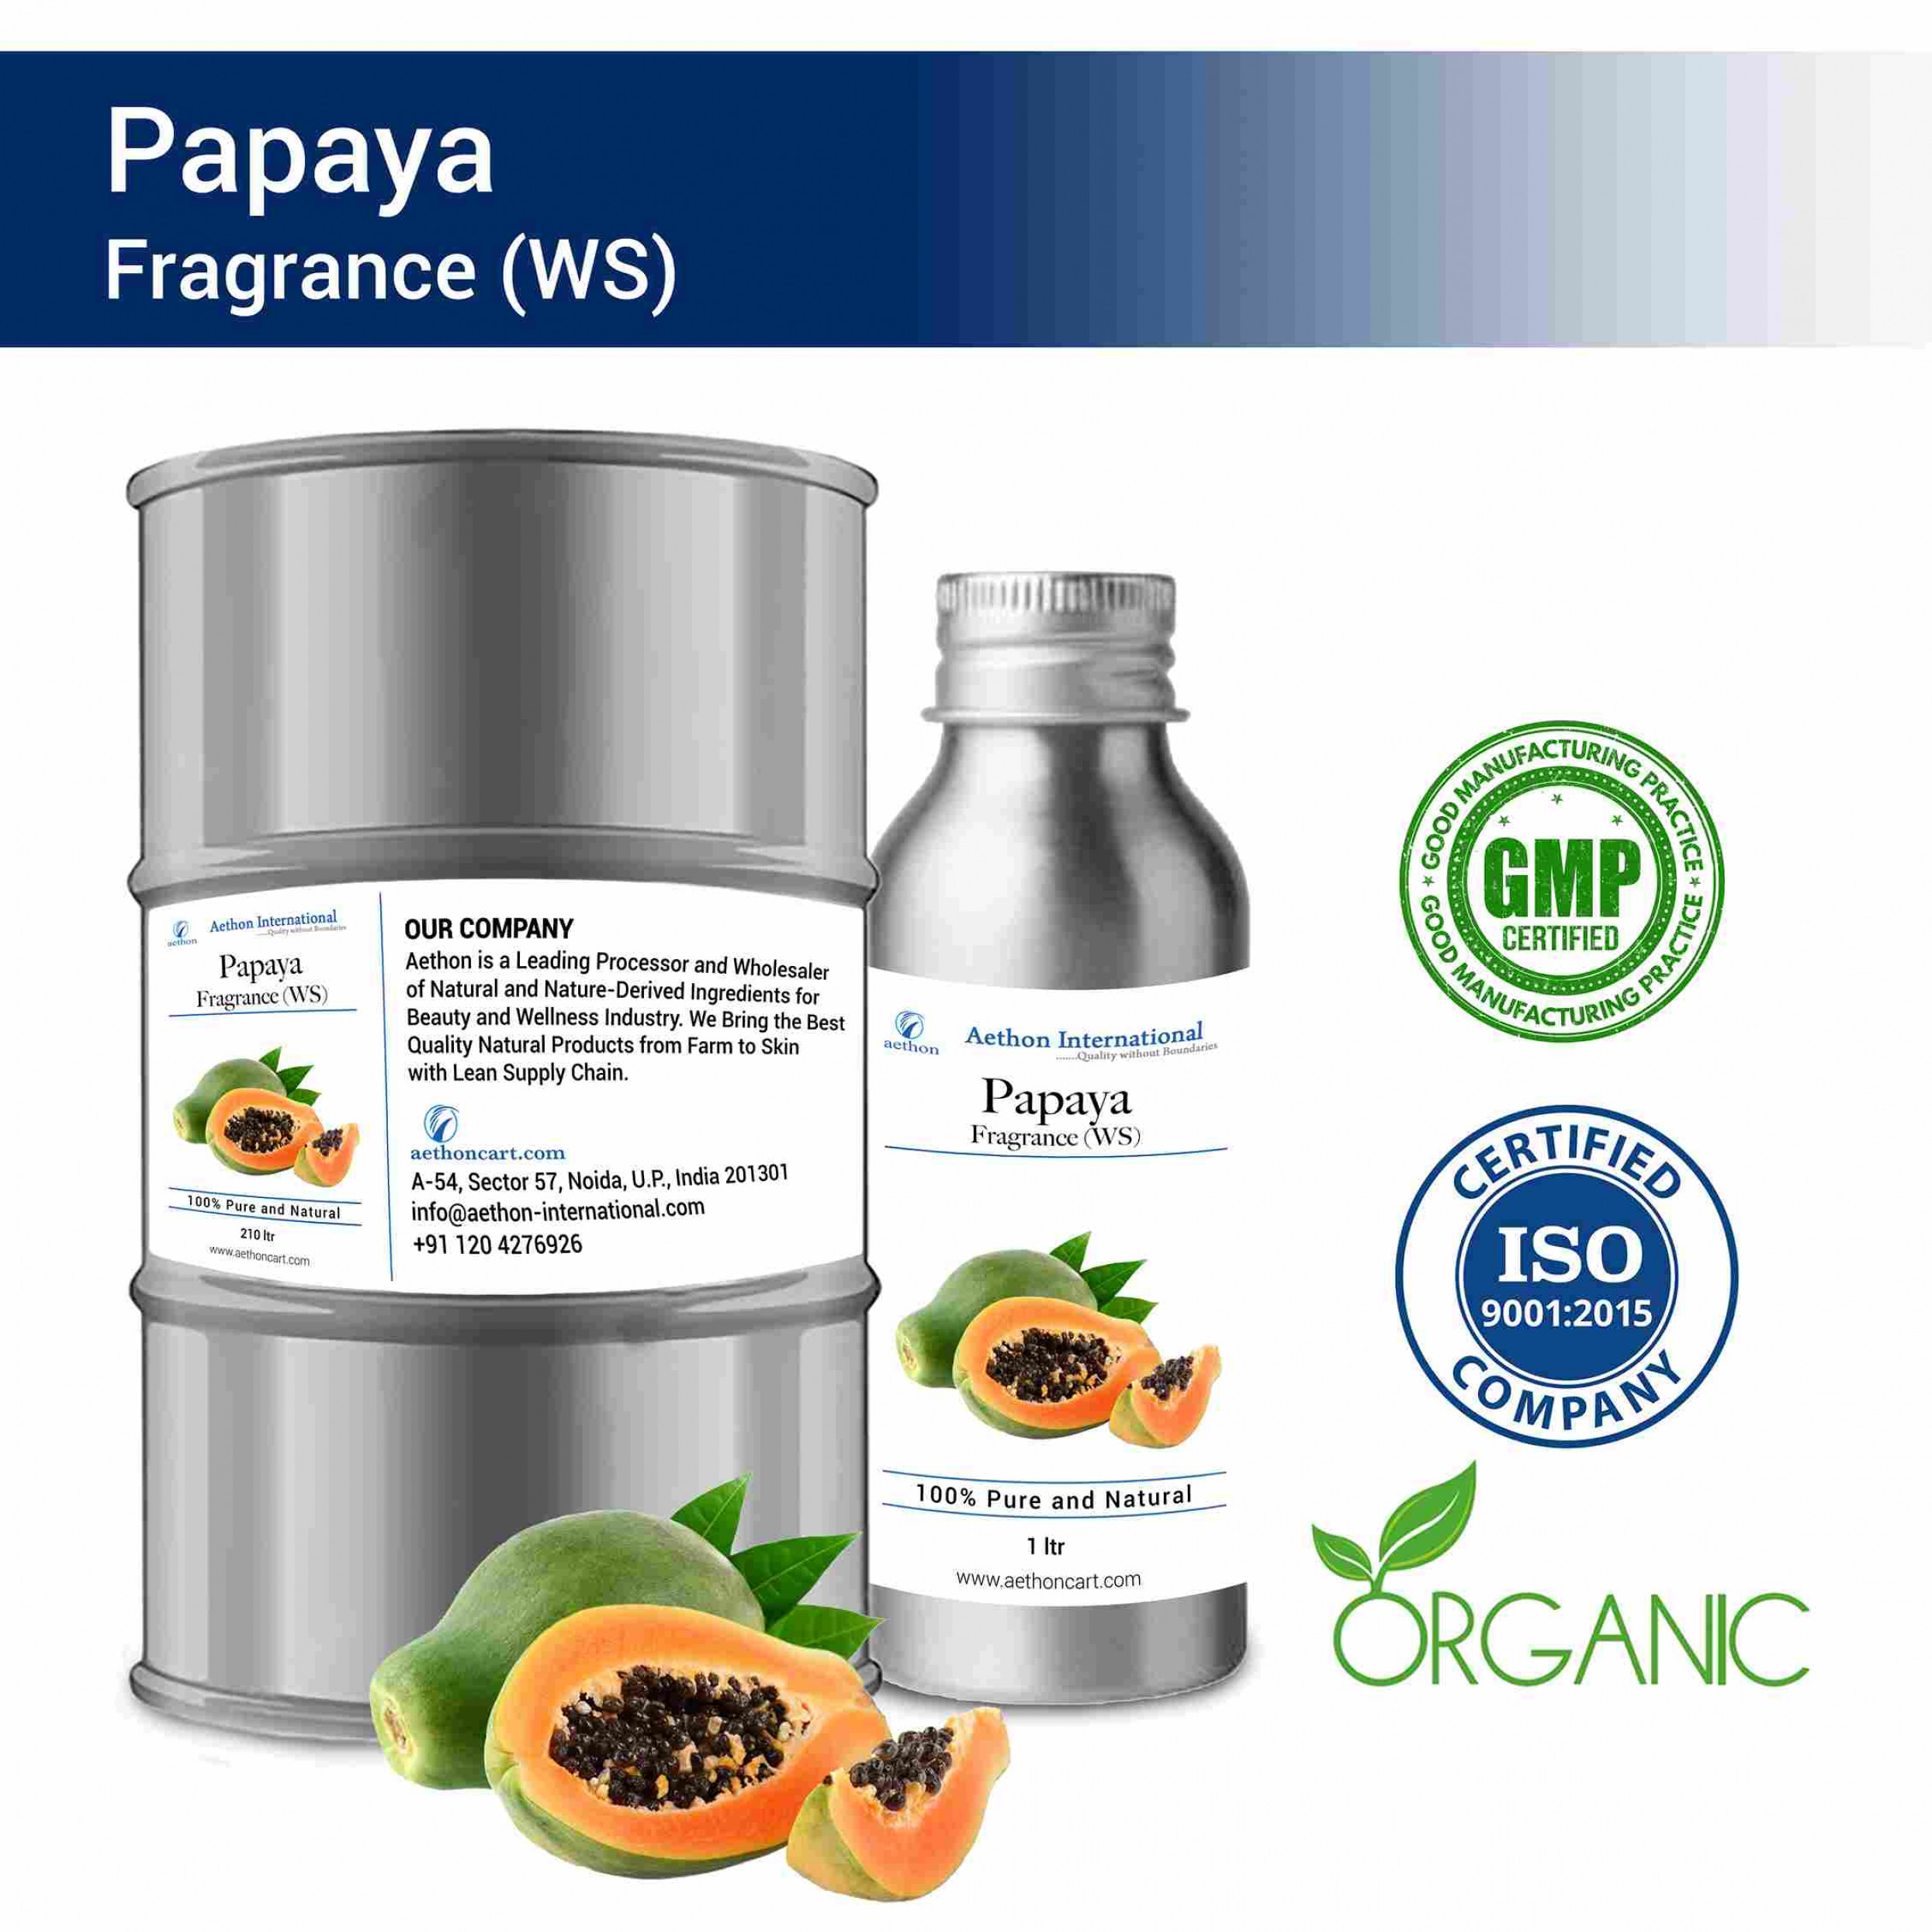 Papaya Fragrance (WS)